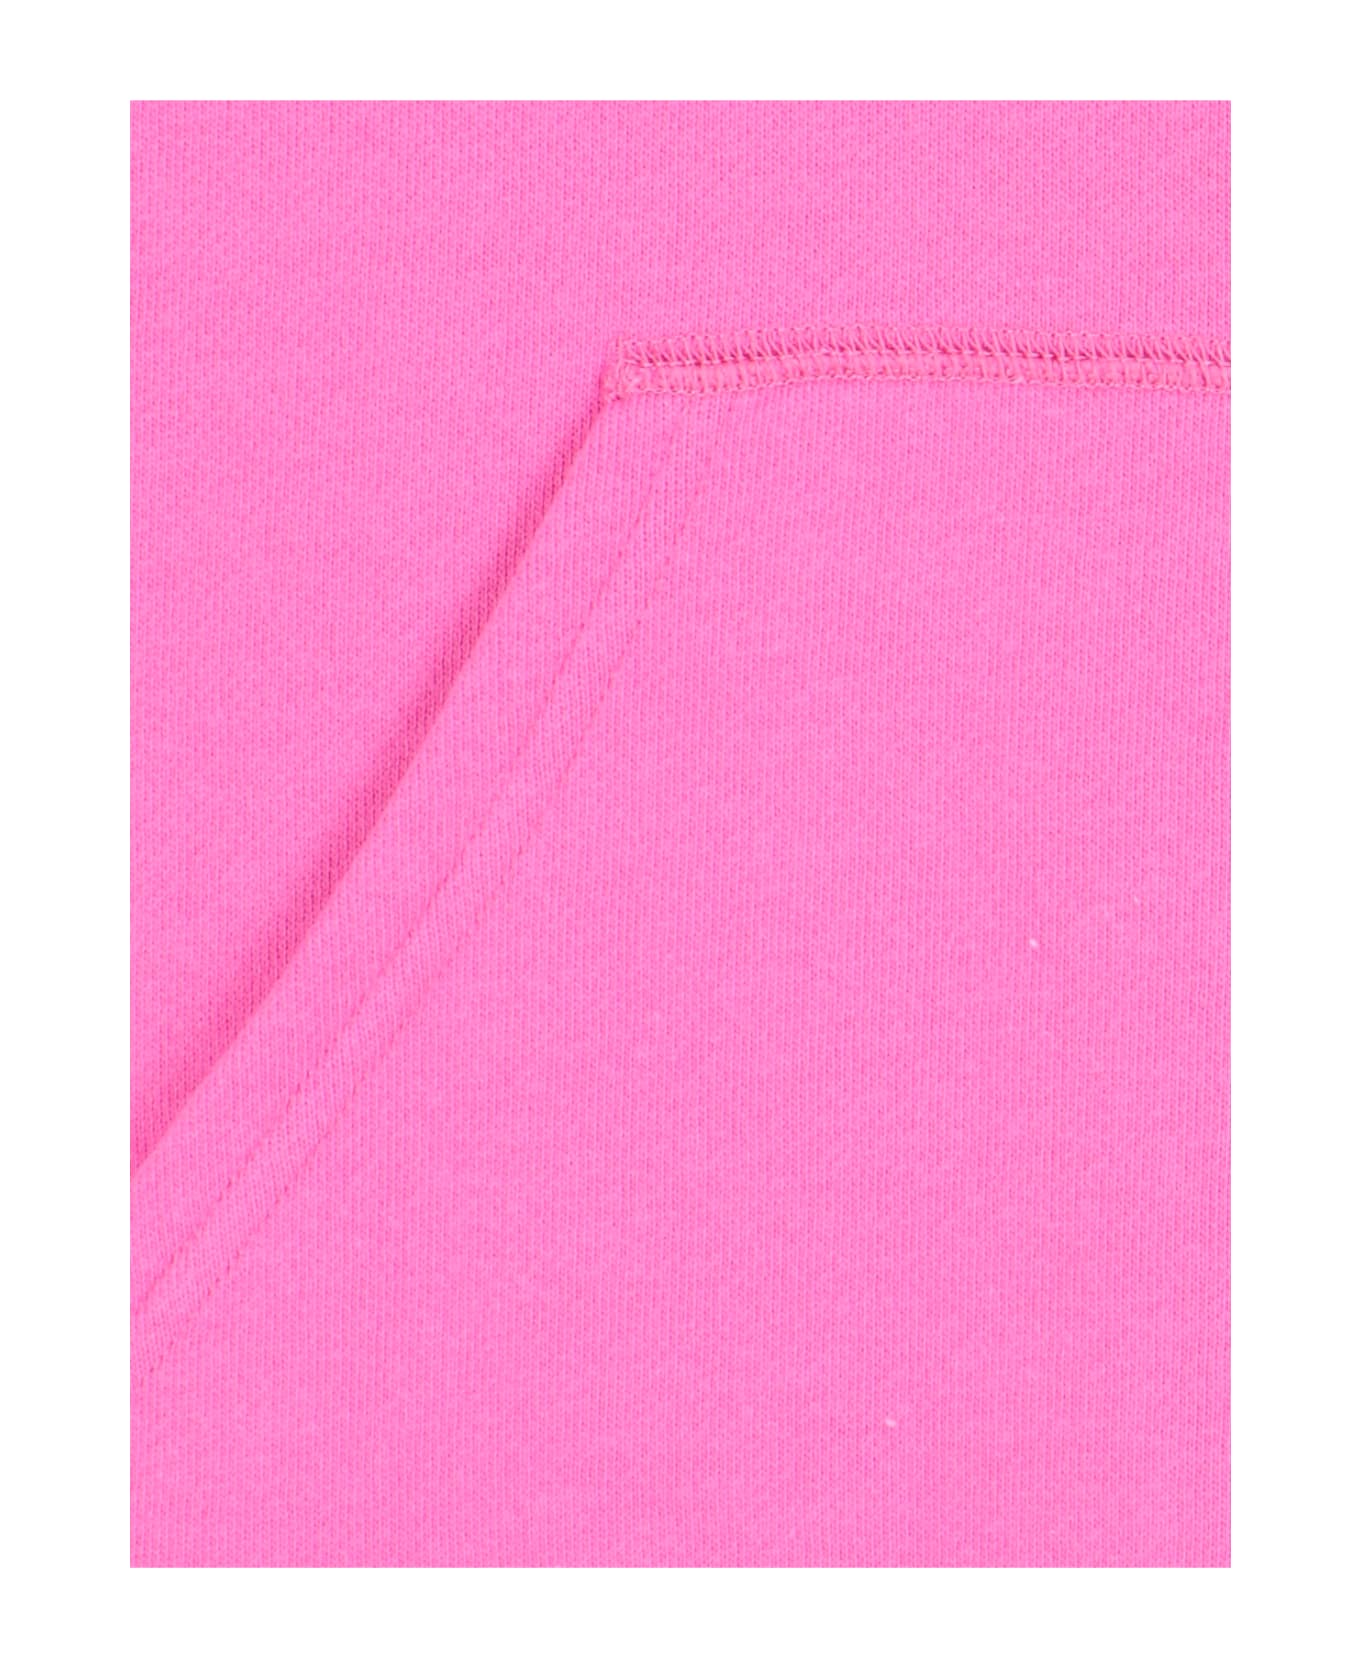 Isabel Marant Rose Cotton Blend Miley Sweatshirt - Pink